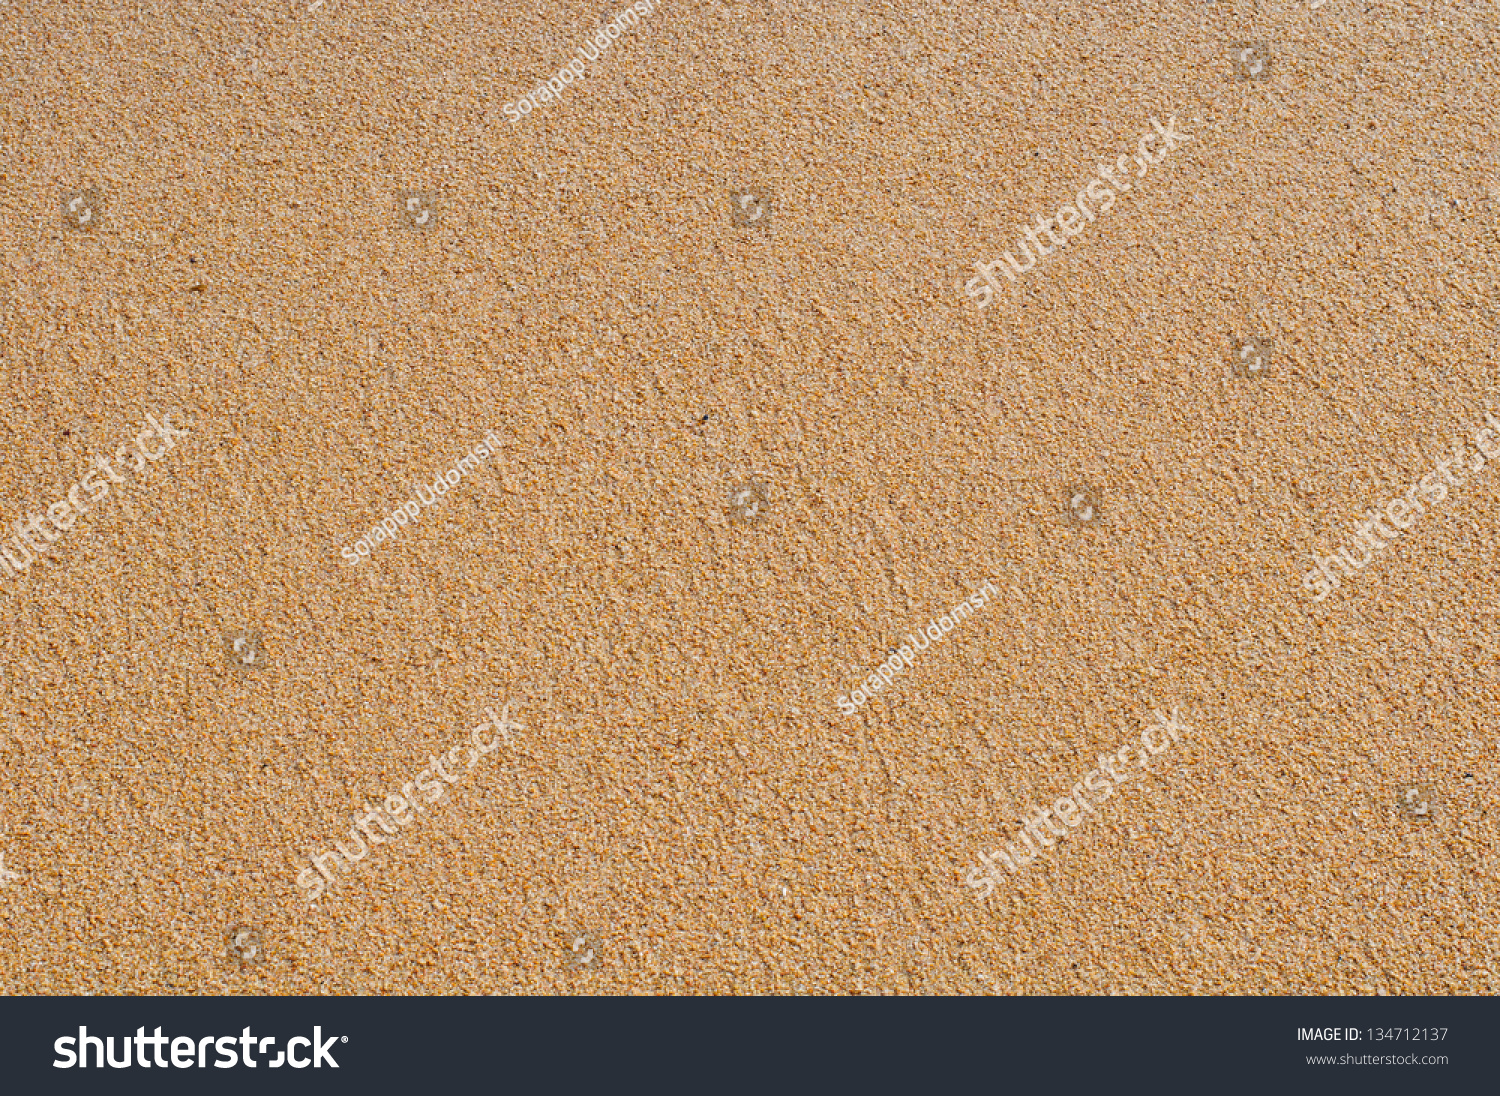 Coarse Sand Background Texture Of Coarse Sand Grains. Stock Photo ...